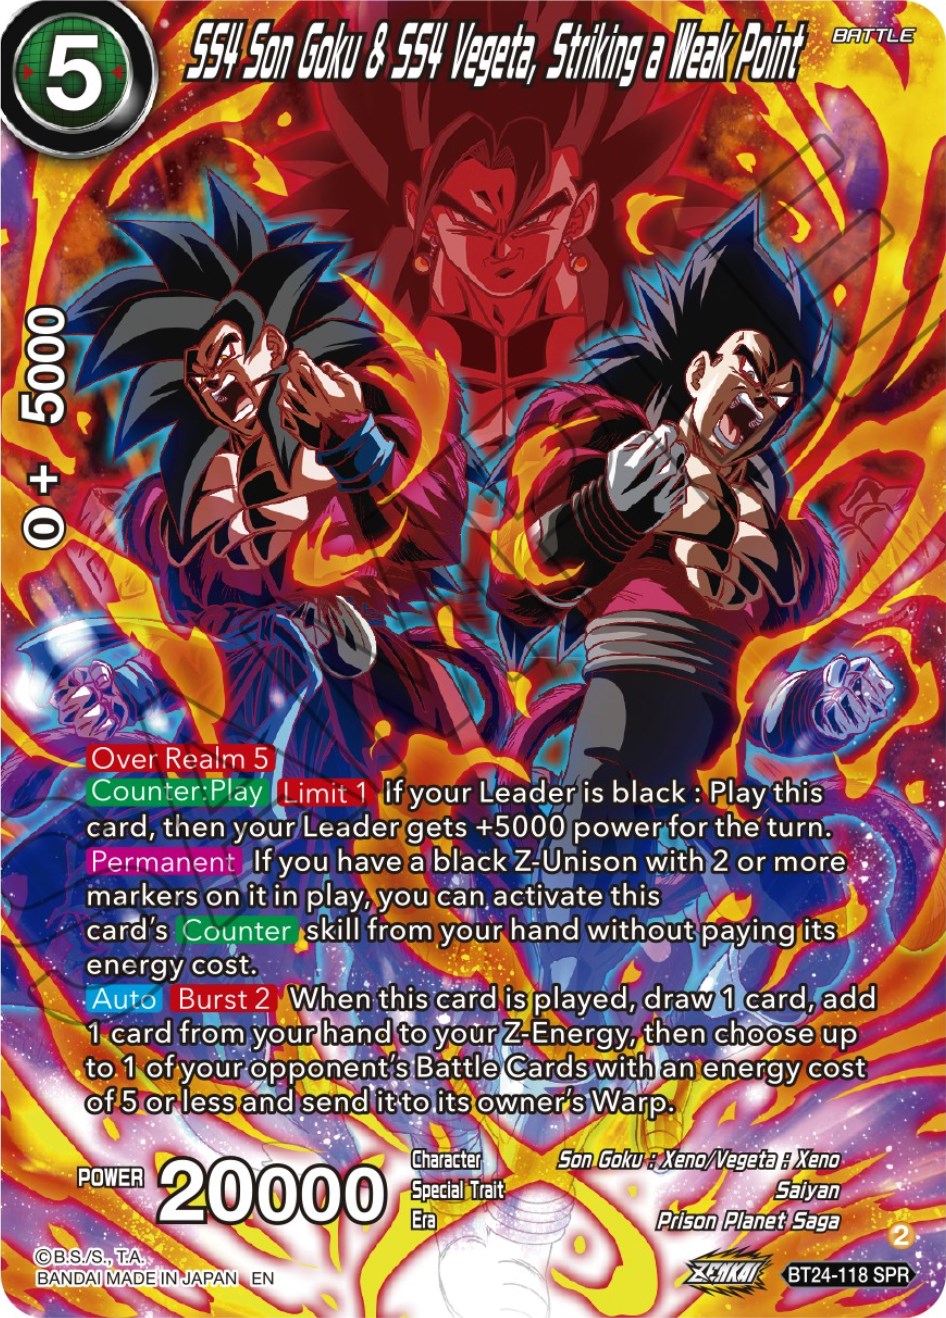 SS4 Son Goku & SS4 Vegeta, Striking a Weak Point (SPR) (BT24-118) [Beyond Generations] | Total Play